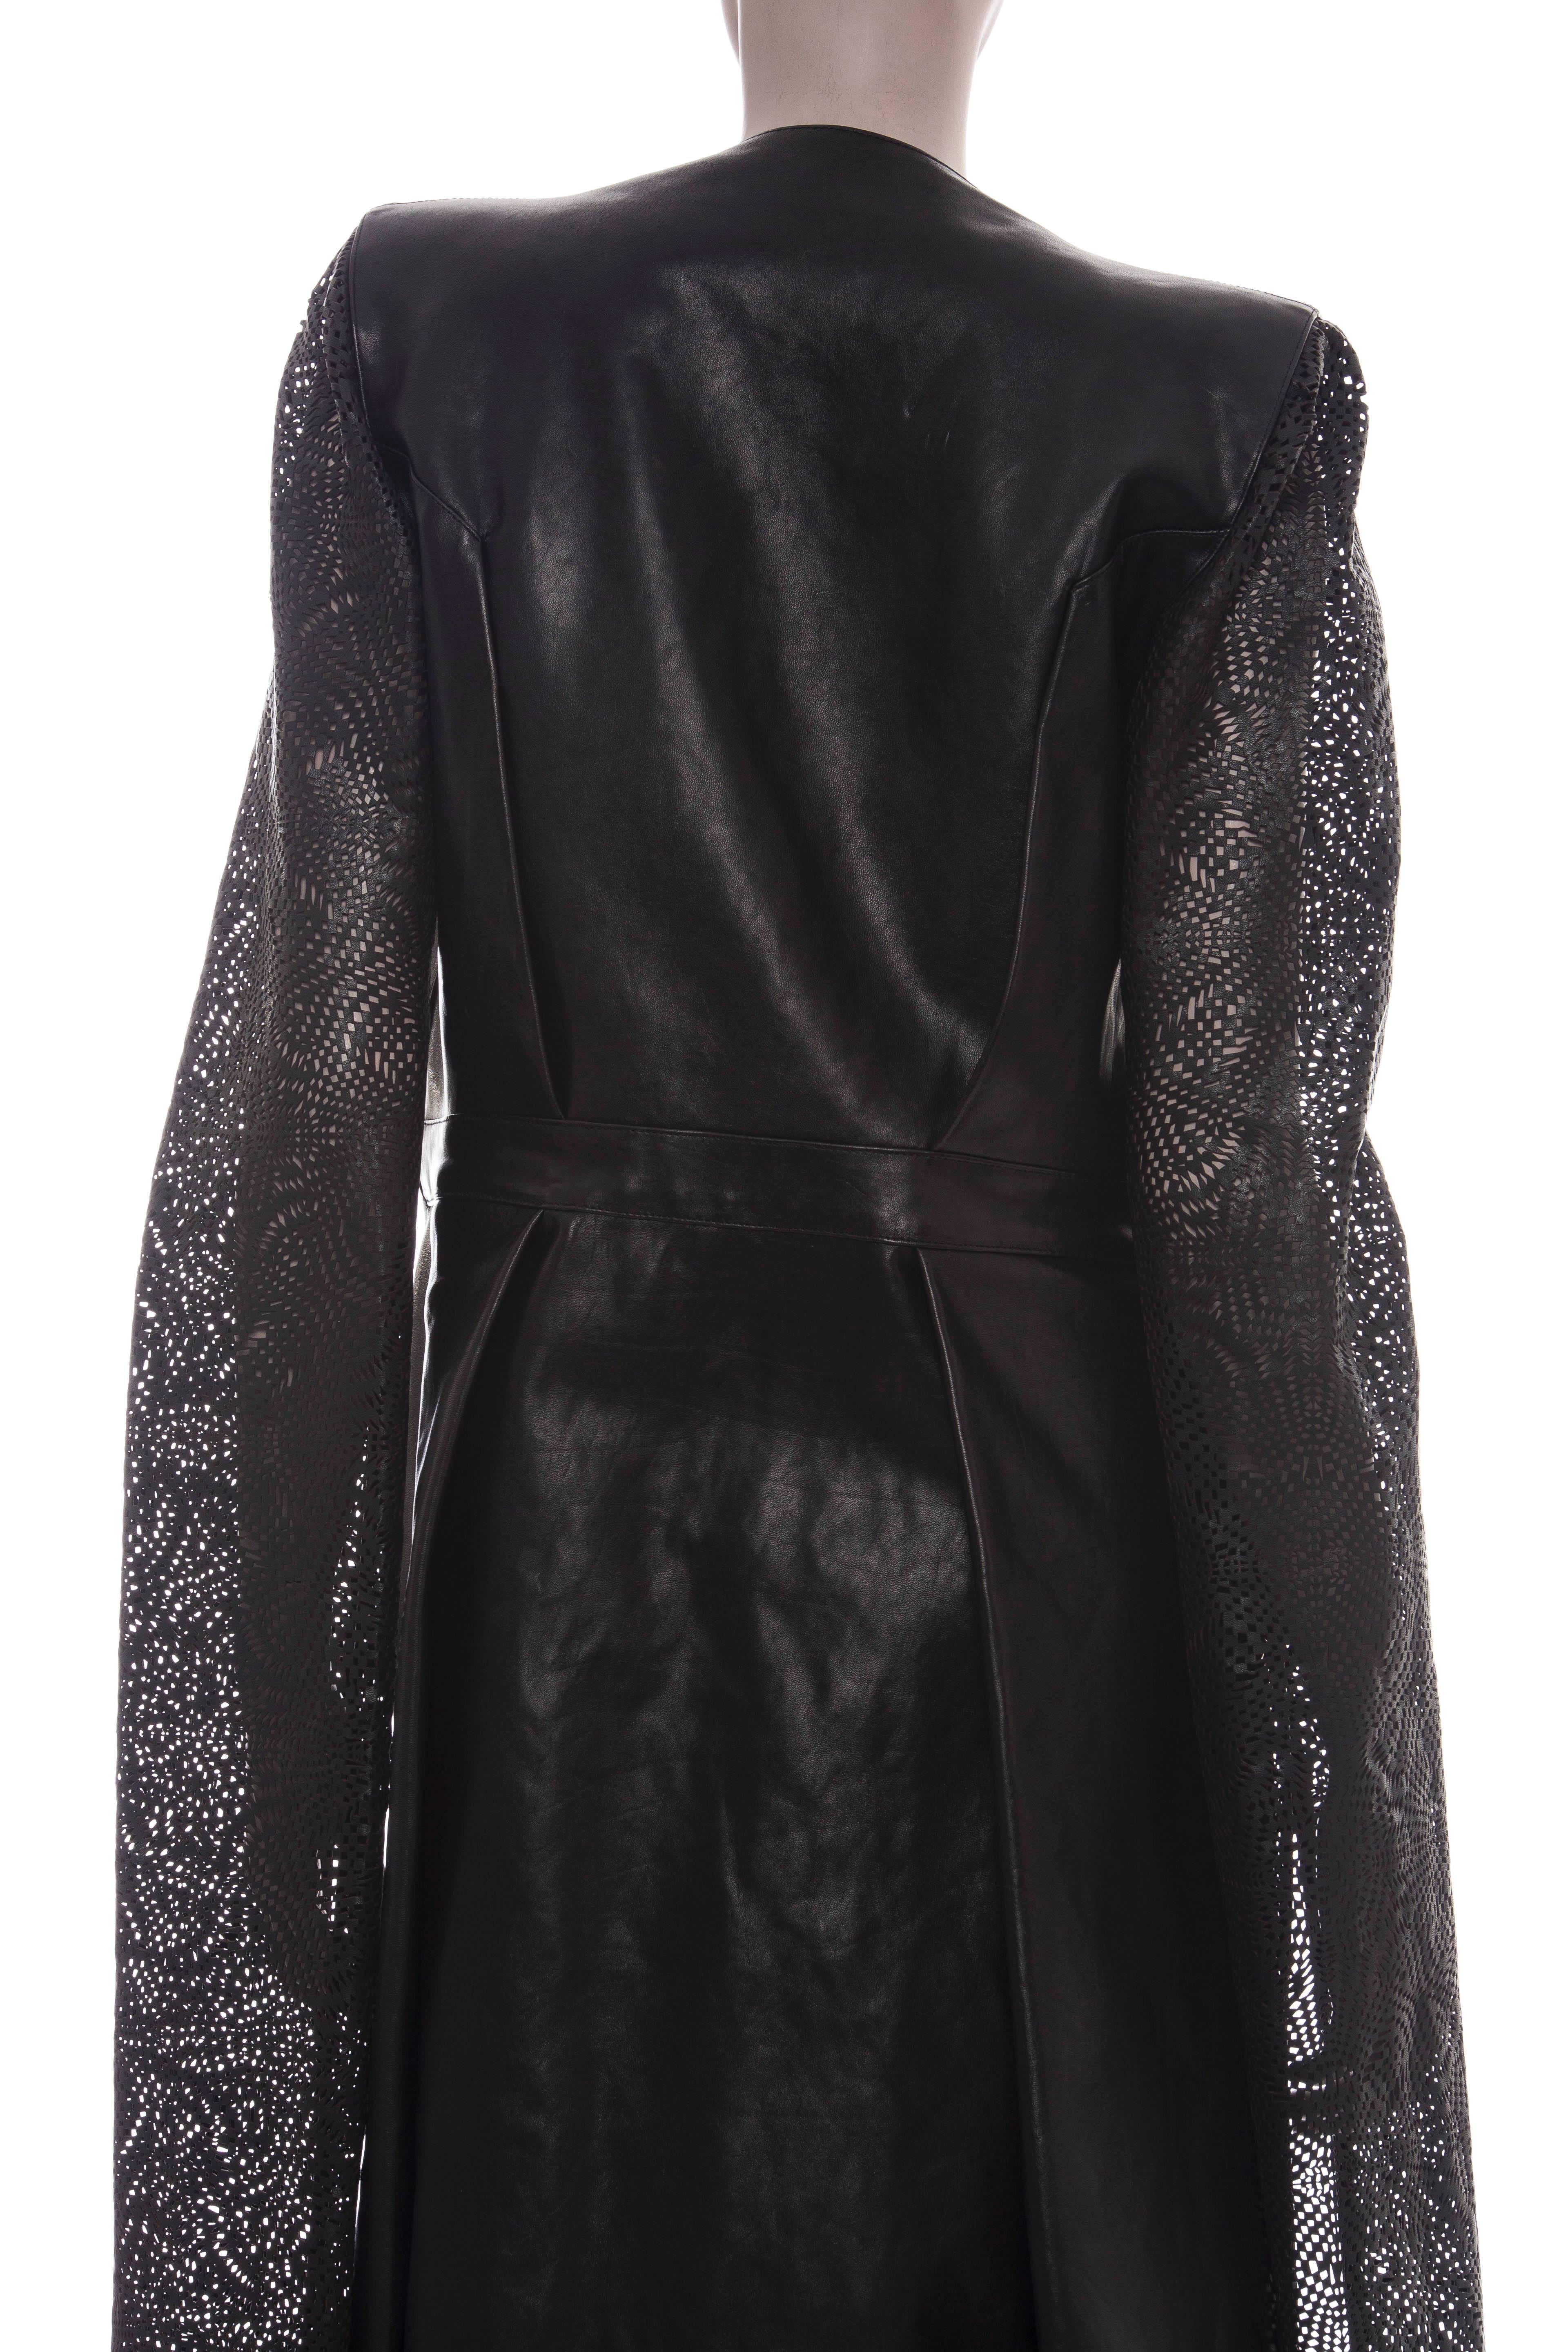 Gareth Pugh Black Leather Coat With Laser Cut Sleeves, Spring - Summer 2013 3